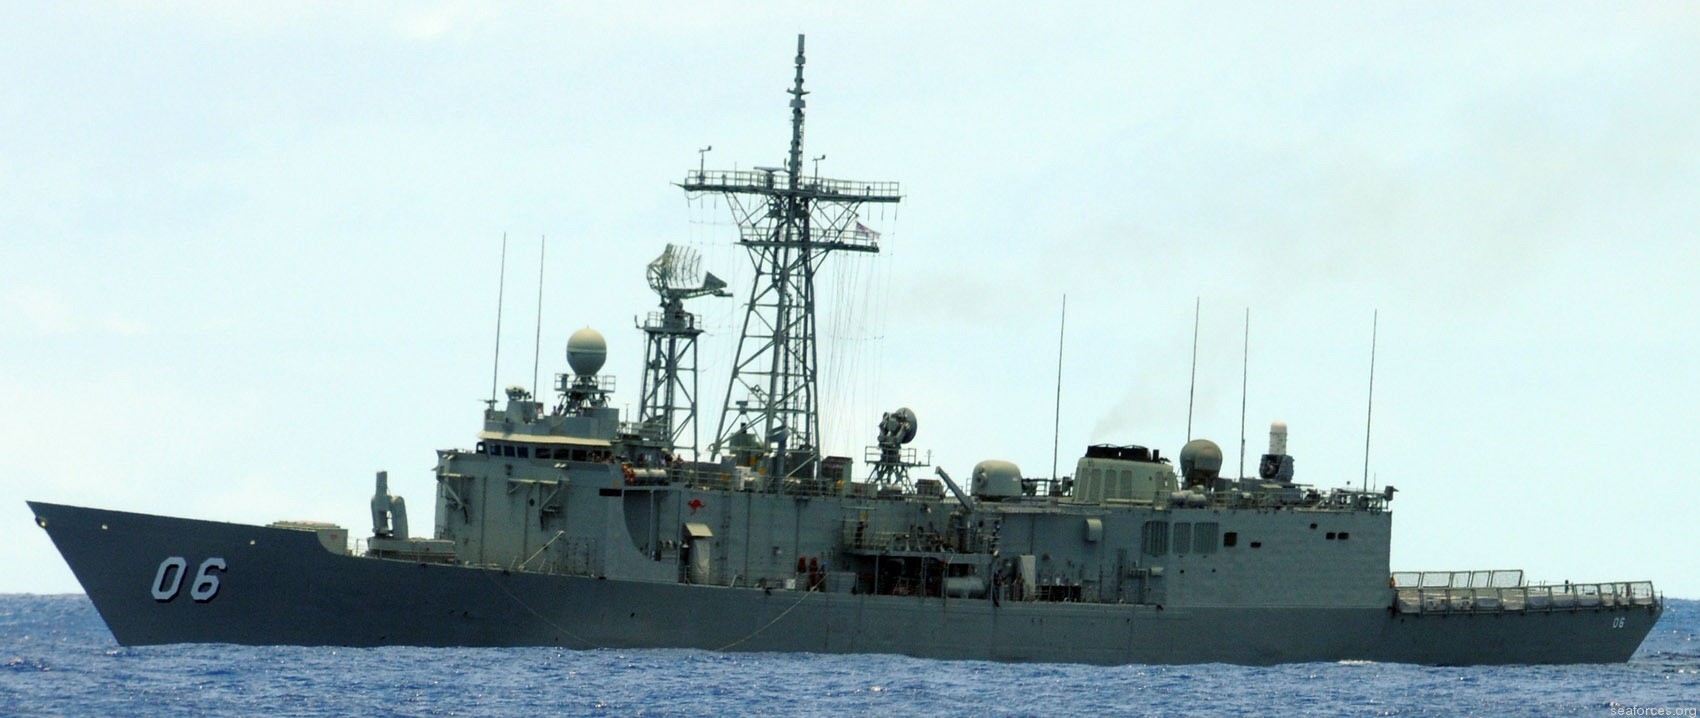 ffg-06 hmas newcastle adelaide class frigate royal australian navy 2010 10